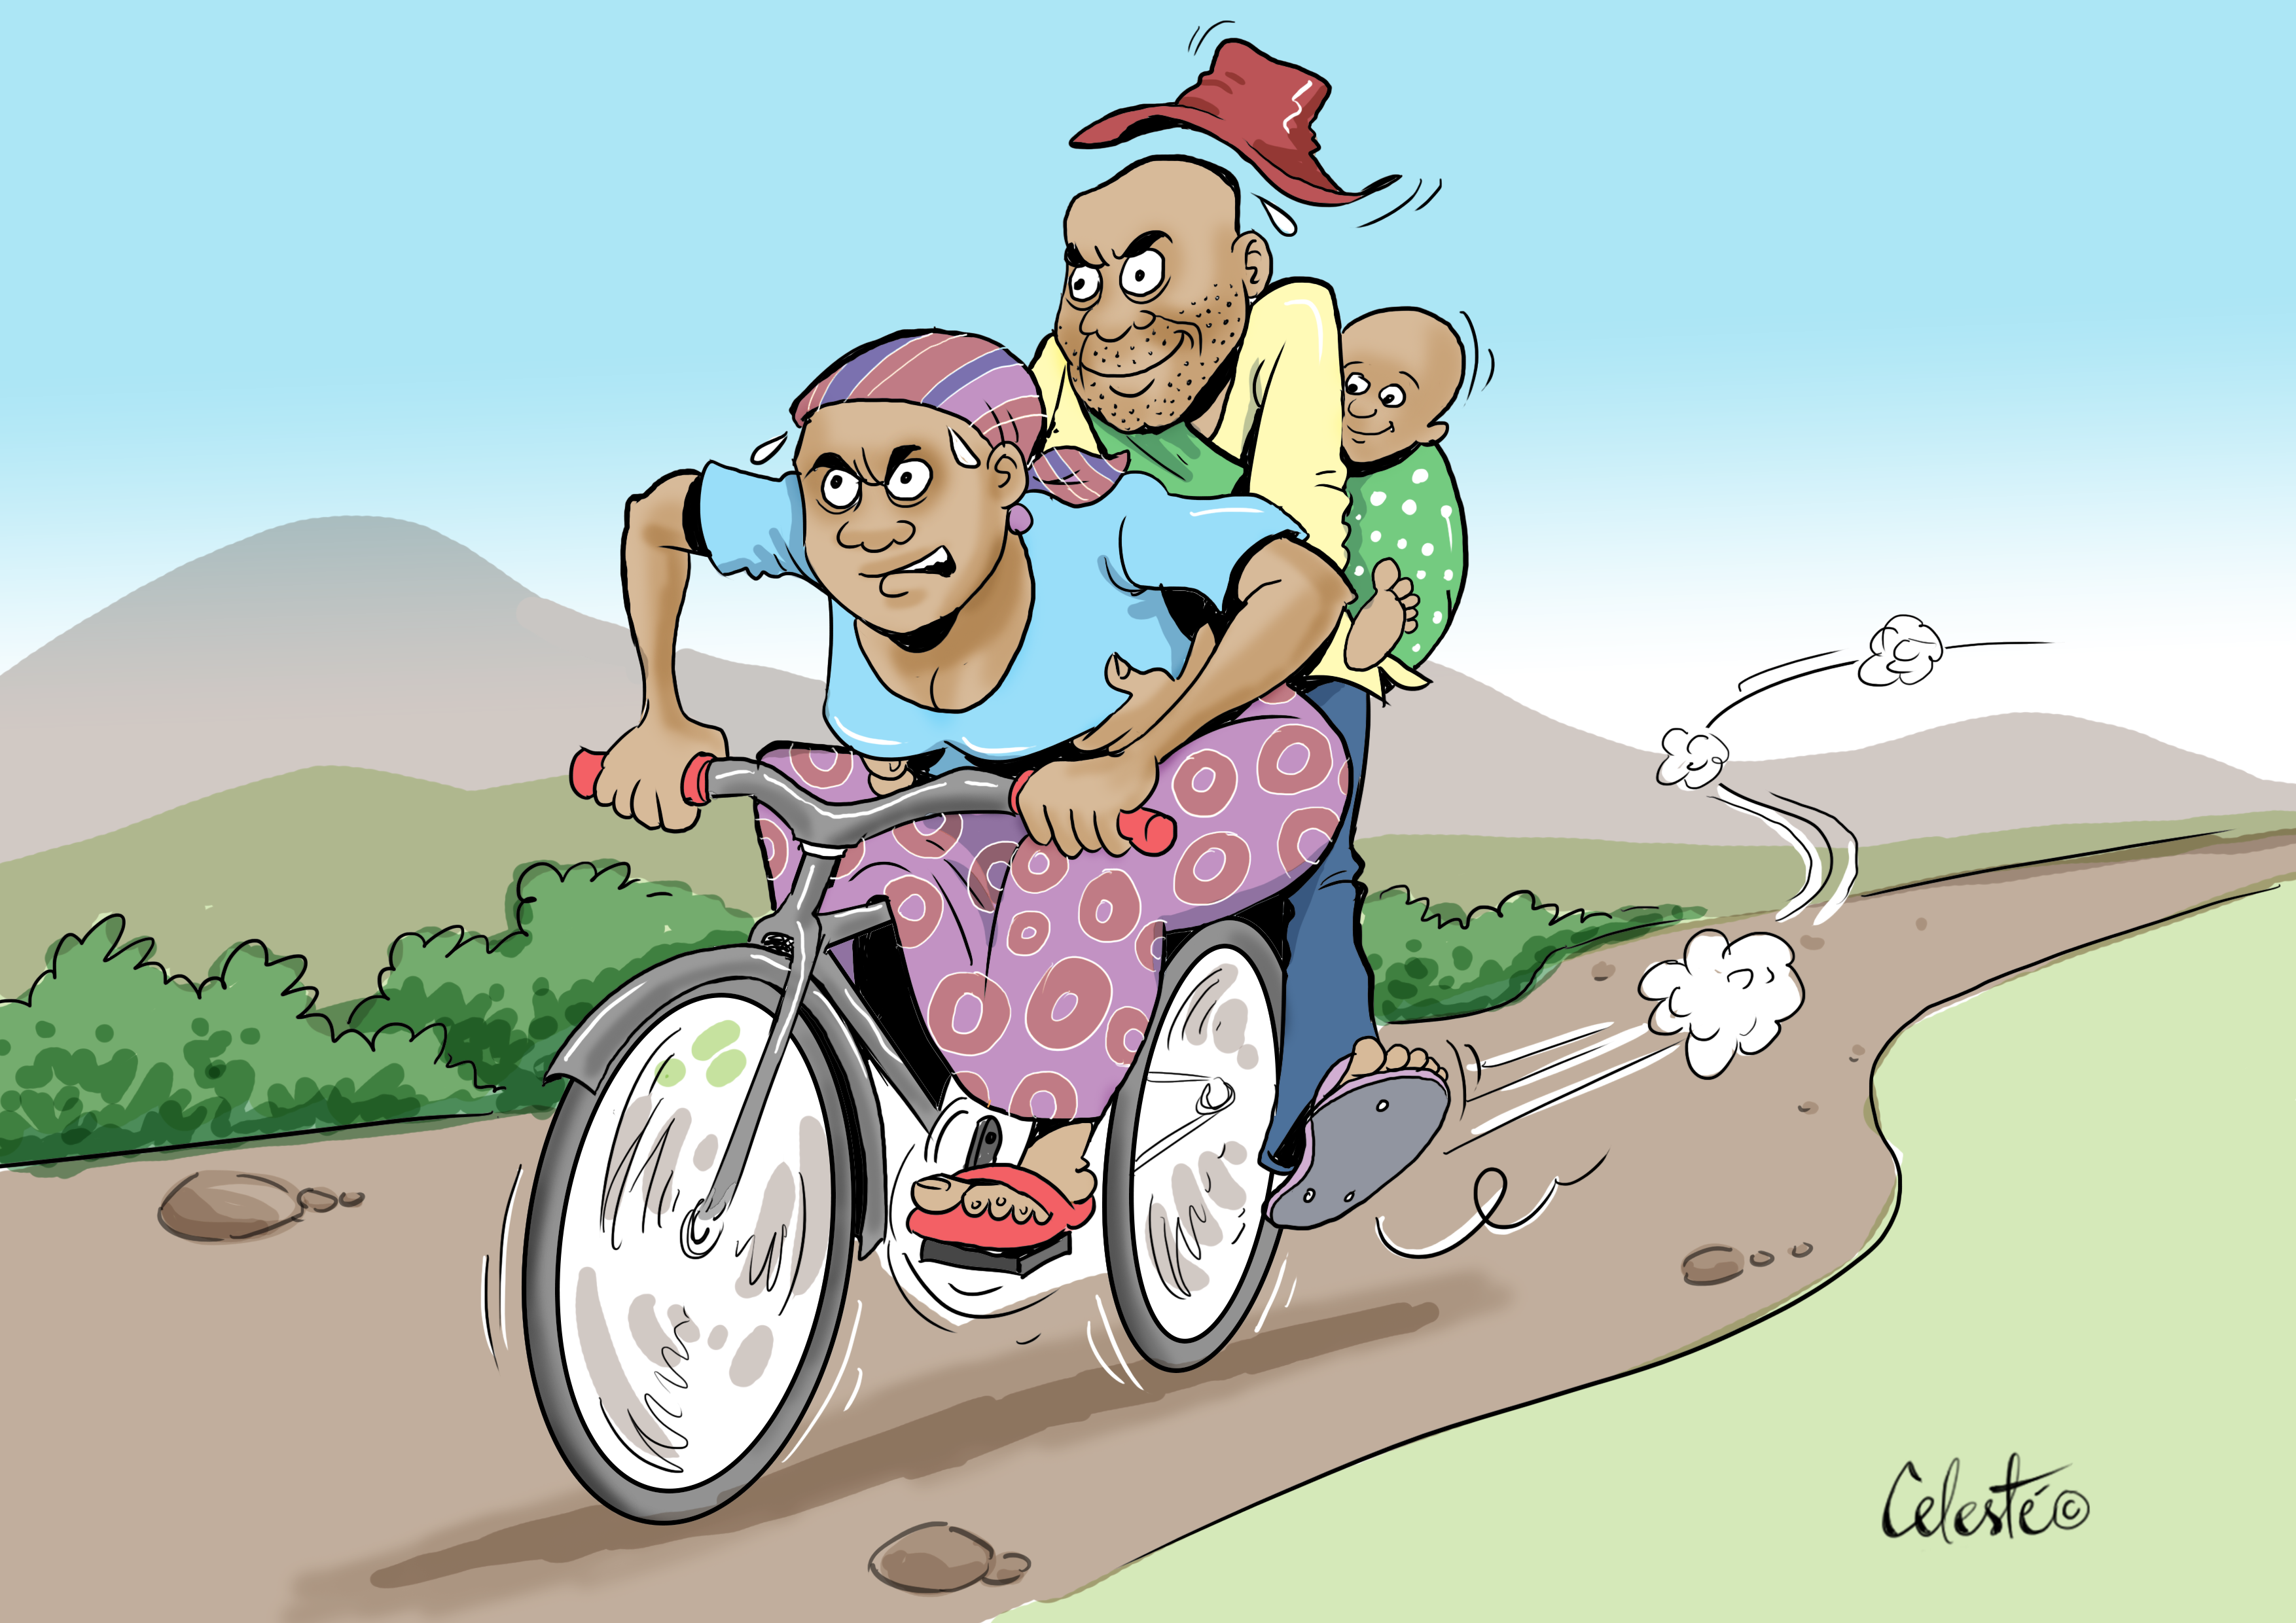 © Celesté (Kenya) – Cartooning for Peace